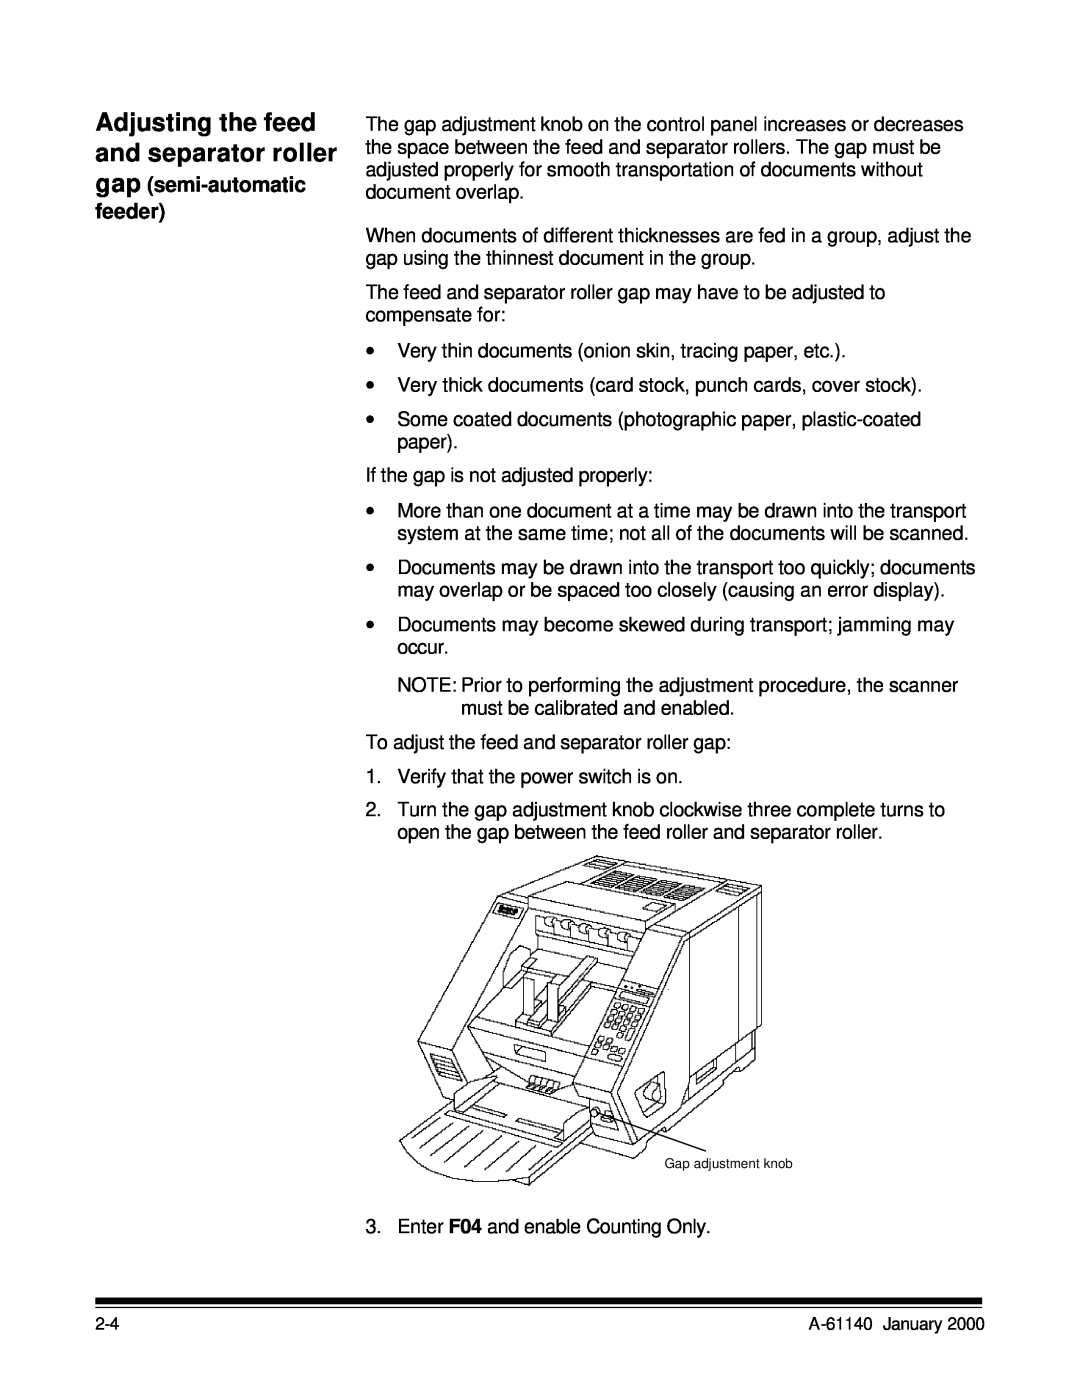 Kodak 7520 manual Adjusting the feed and separator roller, gap semi-automatic feeder 